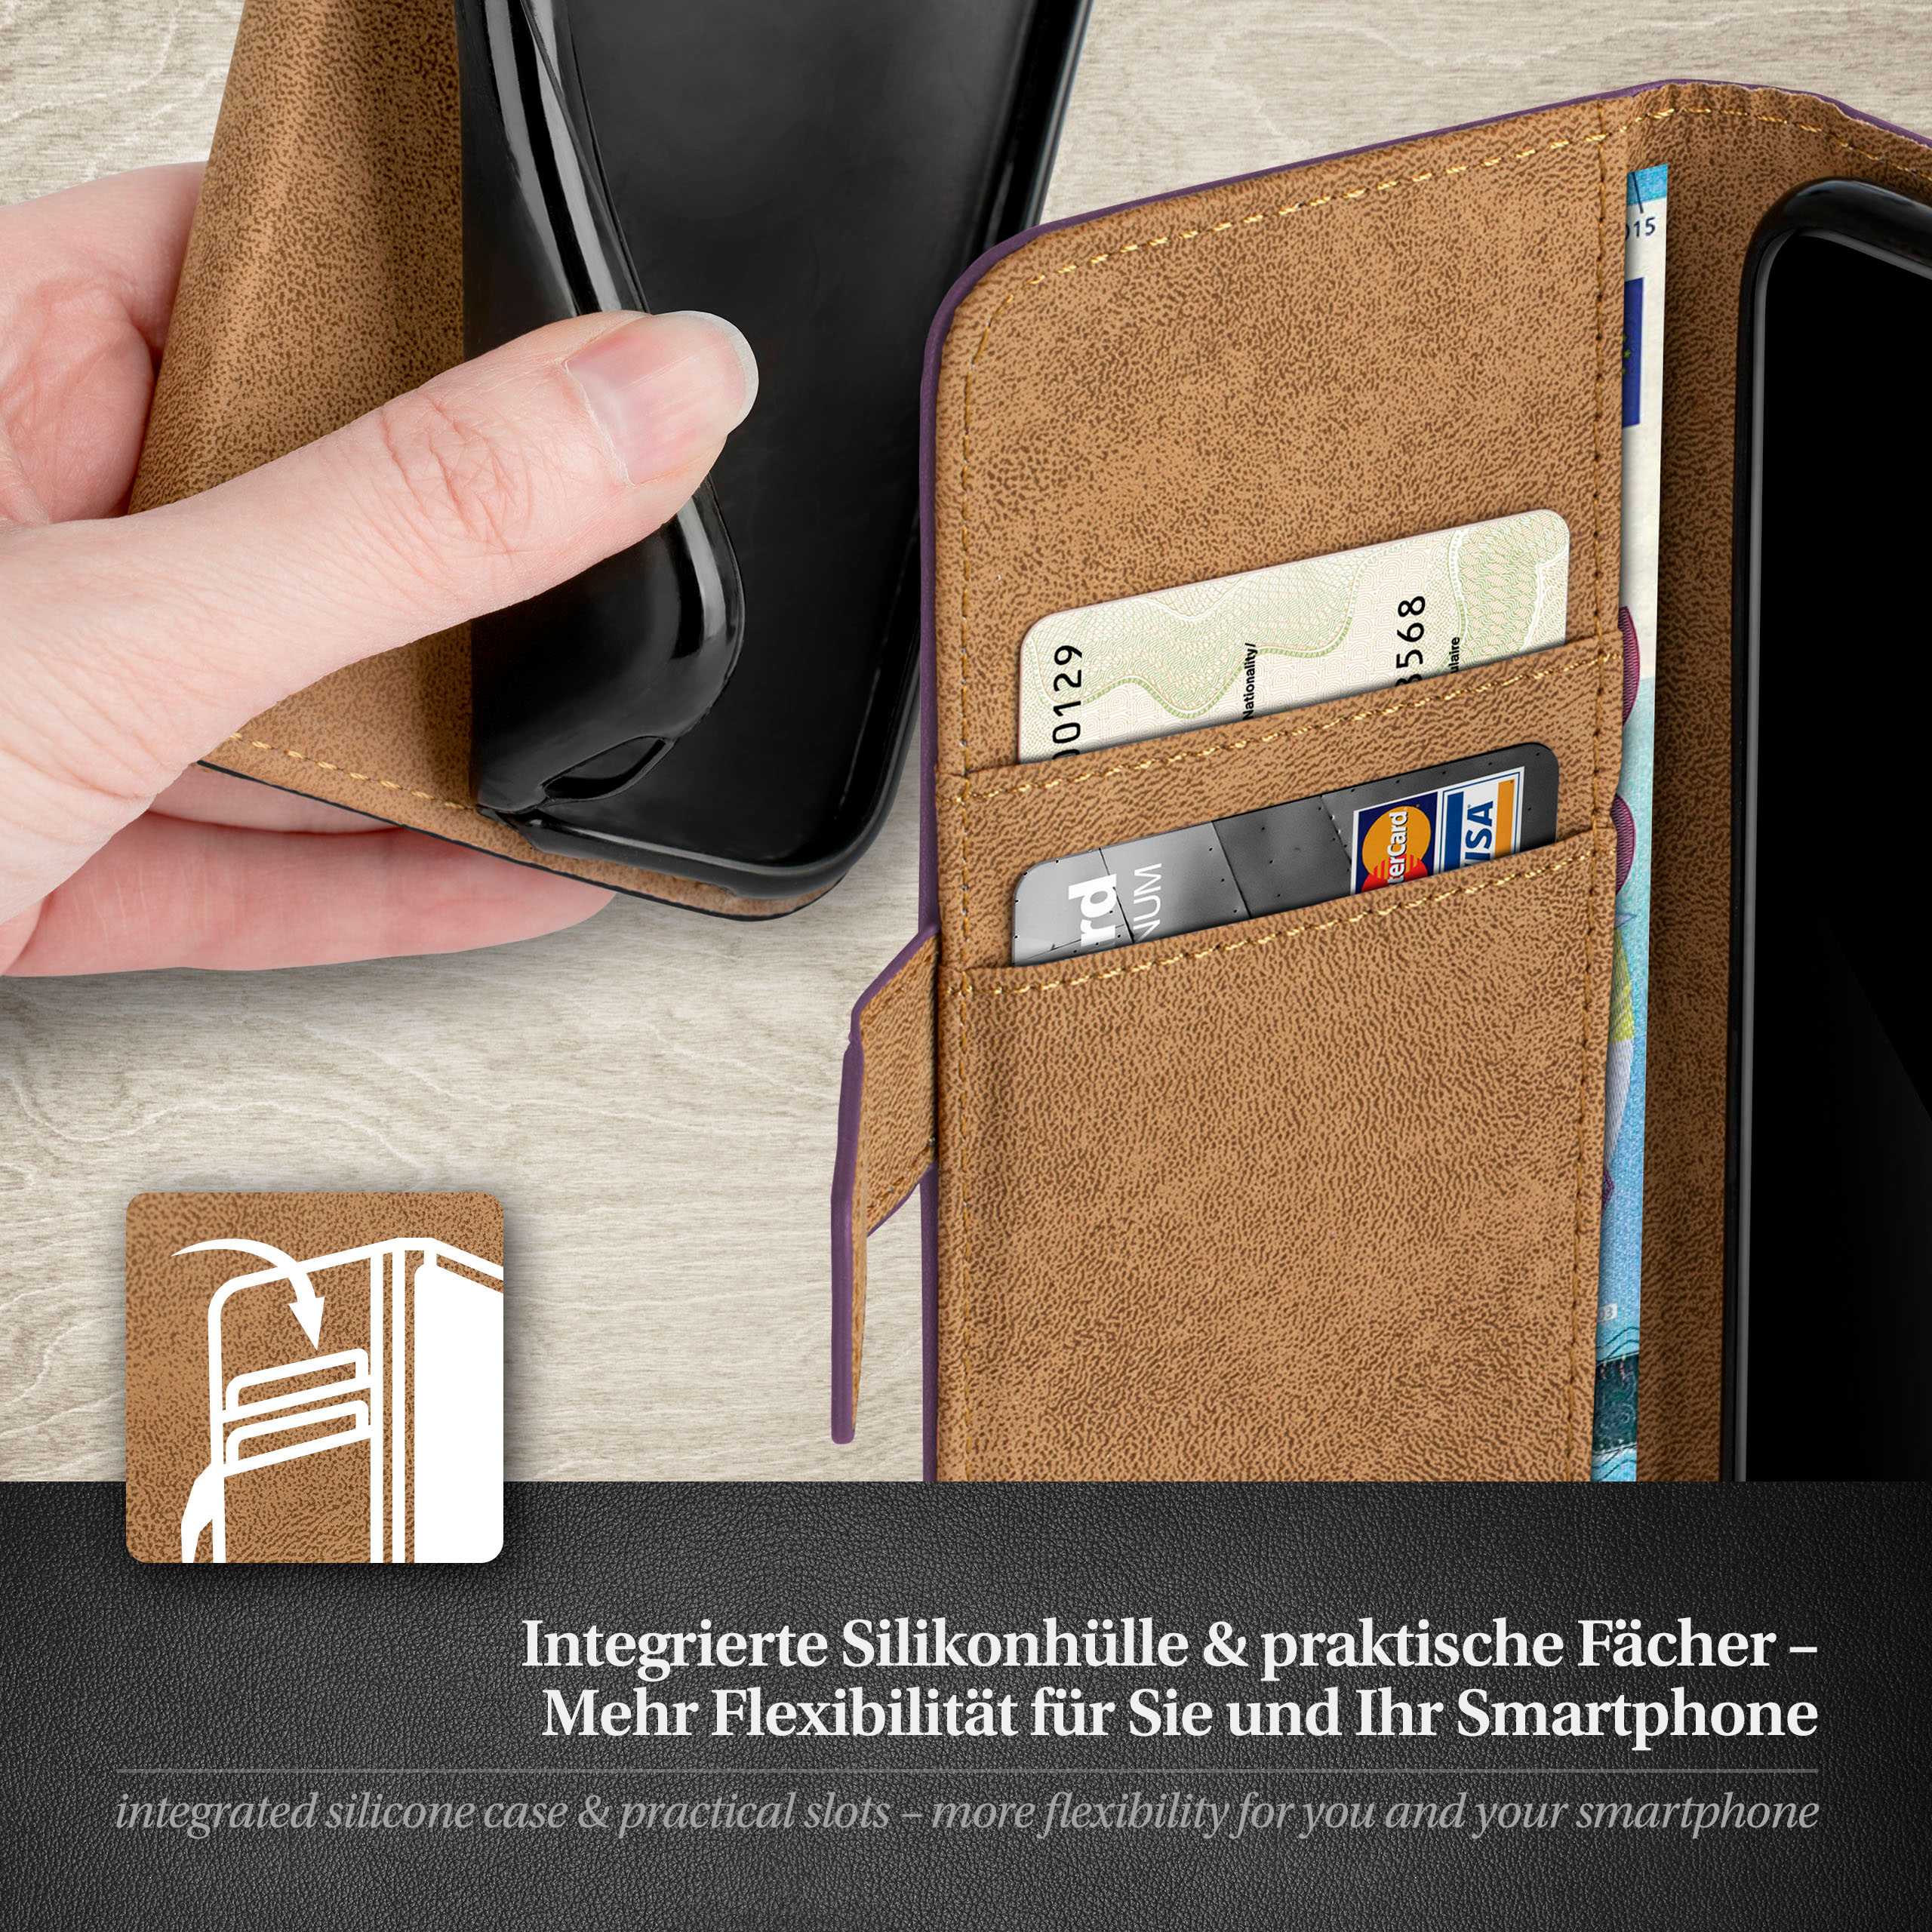 Case, Bookcover, Samsung, Indigo-Violet Edge, Galaxy Book MOEX S6